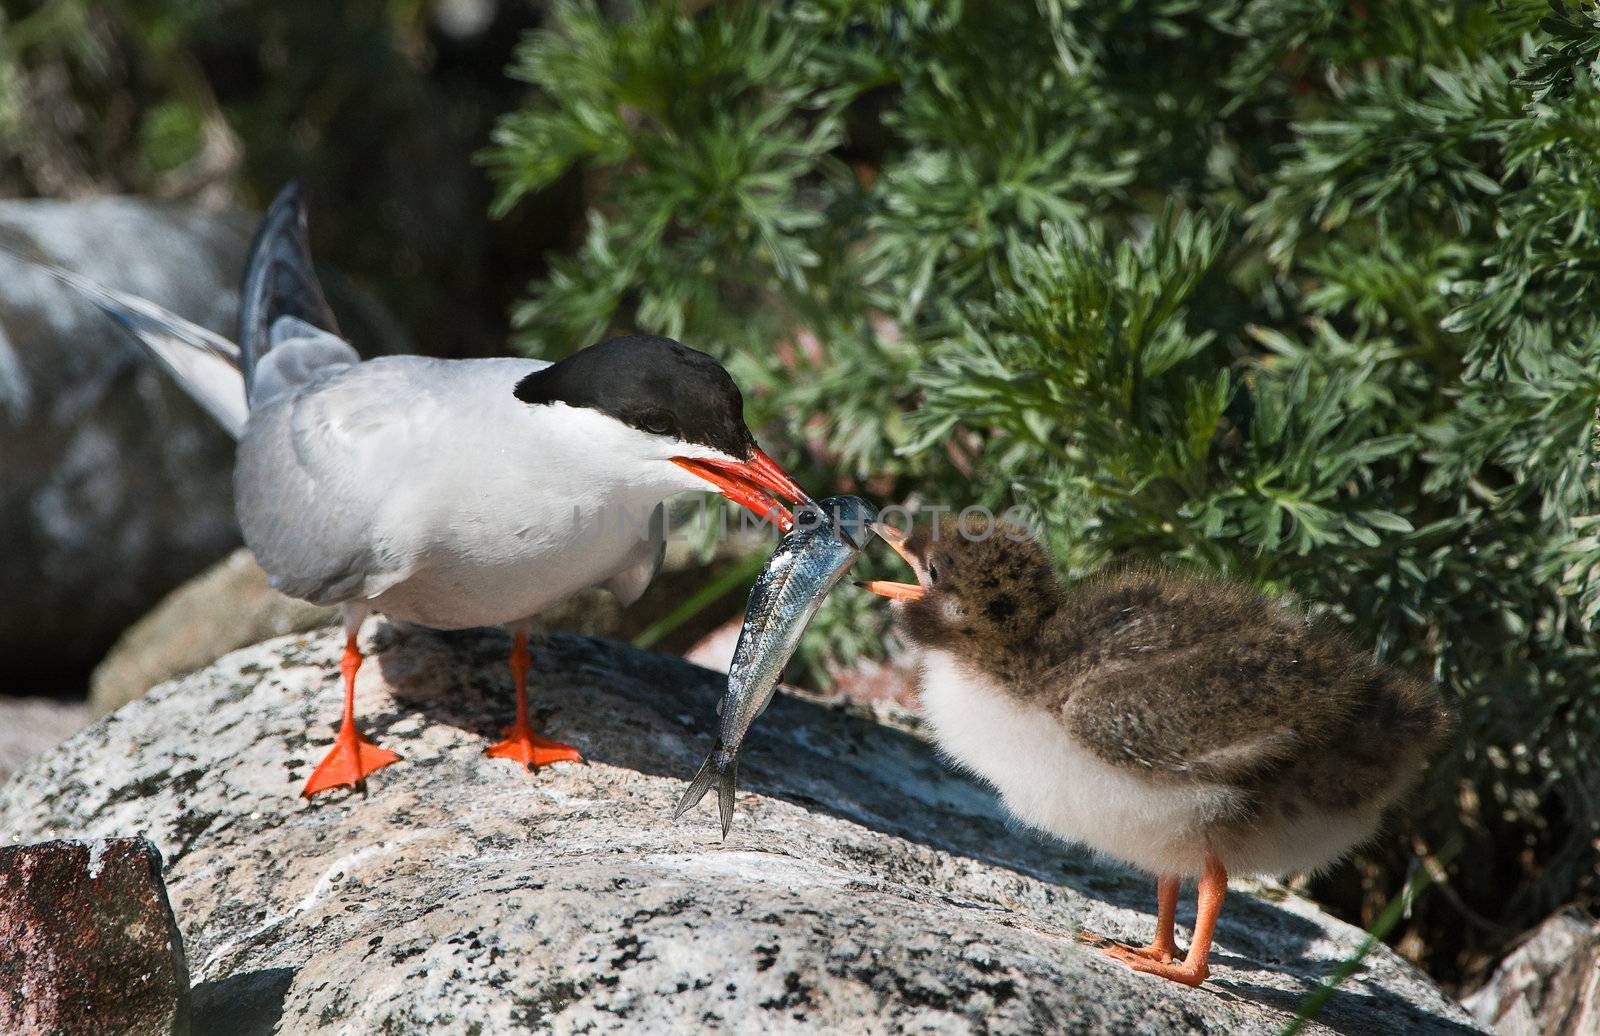 Feeding of a baby bird. by SURZ